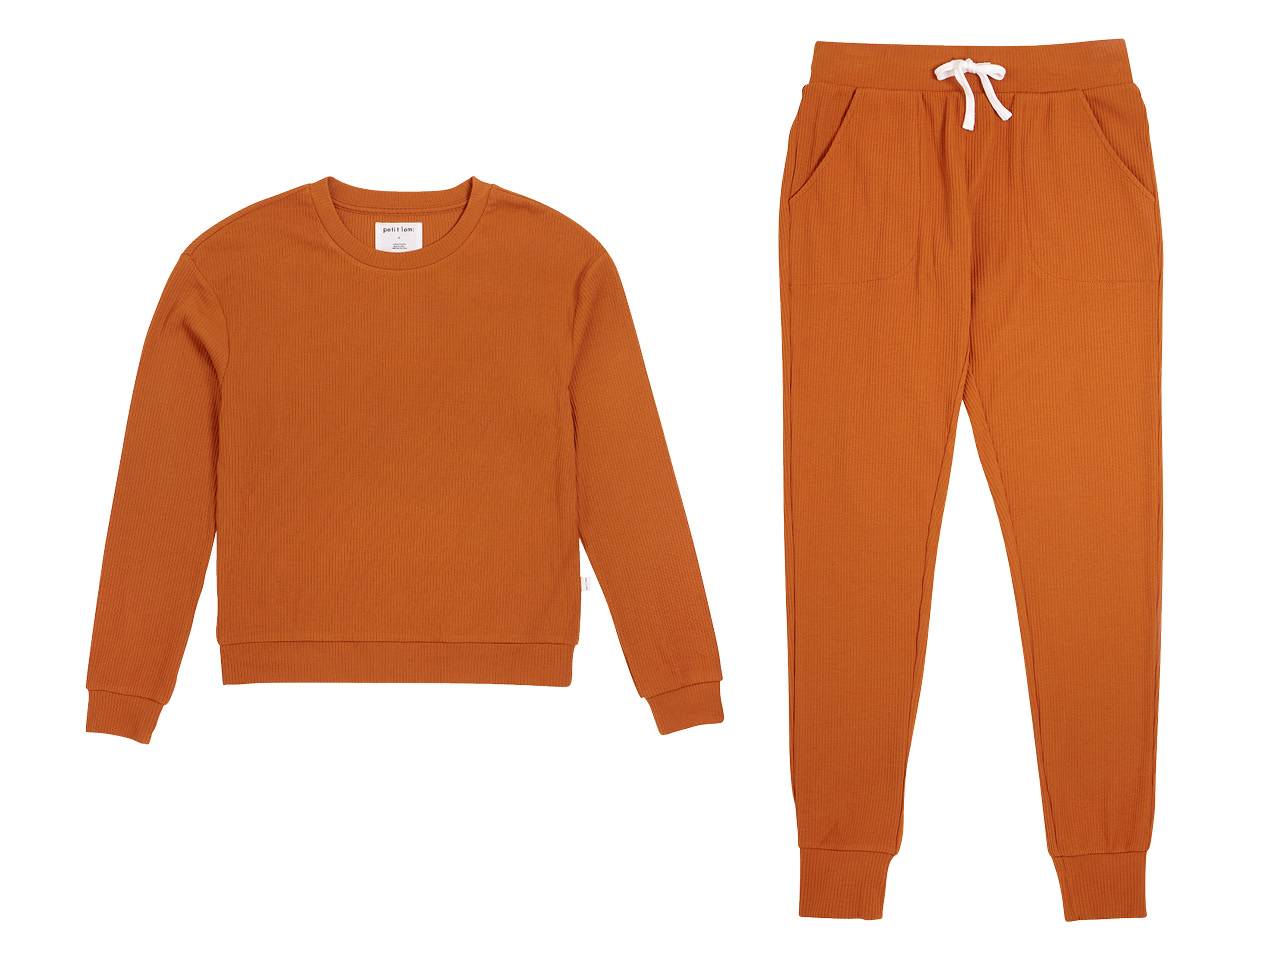 Matching burnt orange long sleeve top and bottom pyjamas.